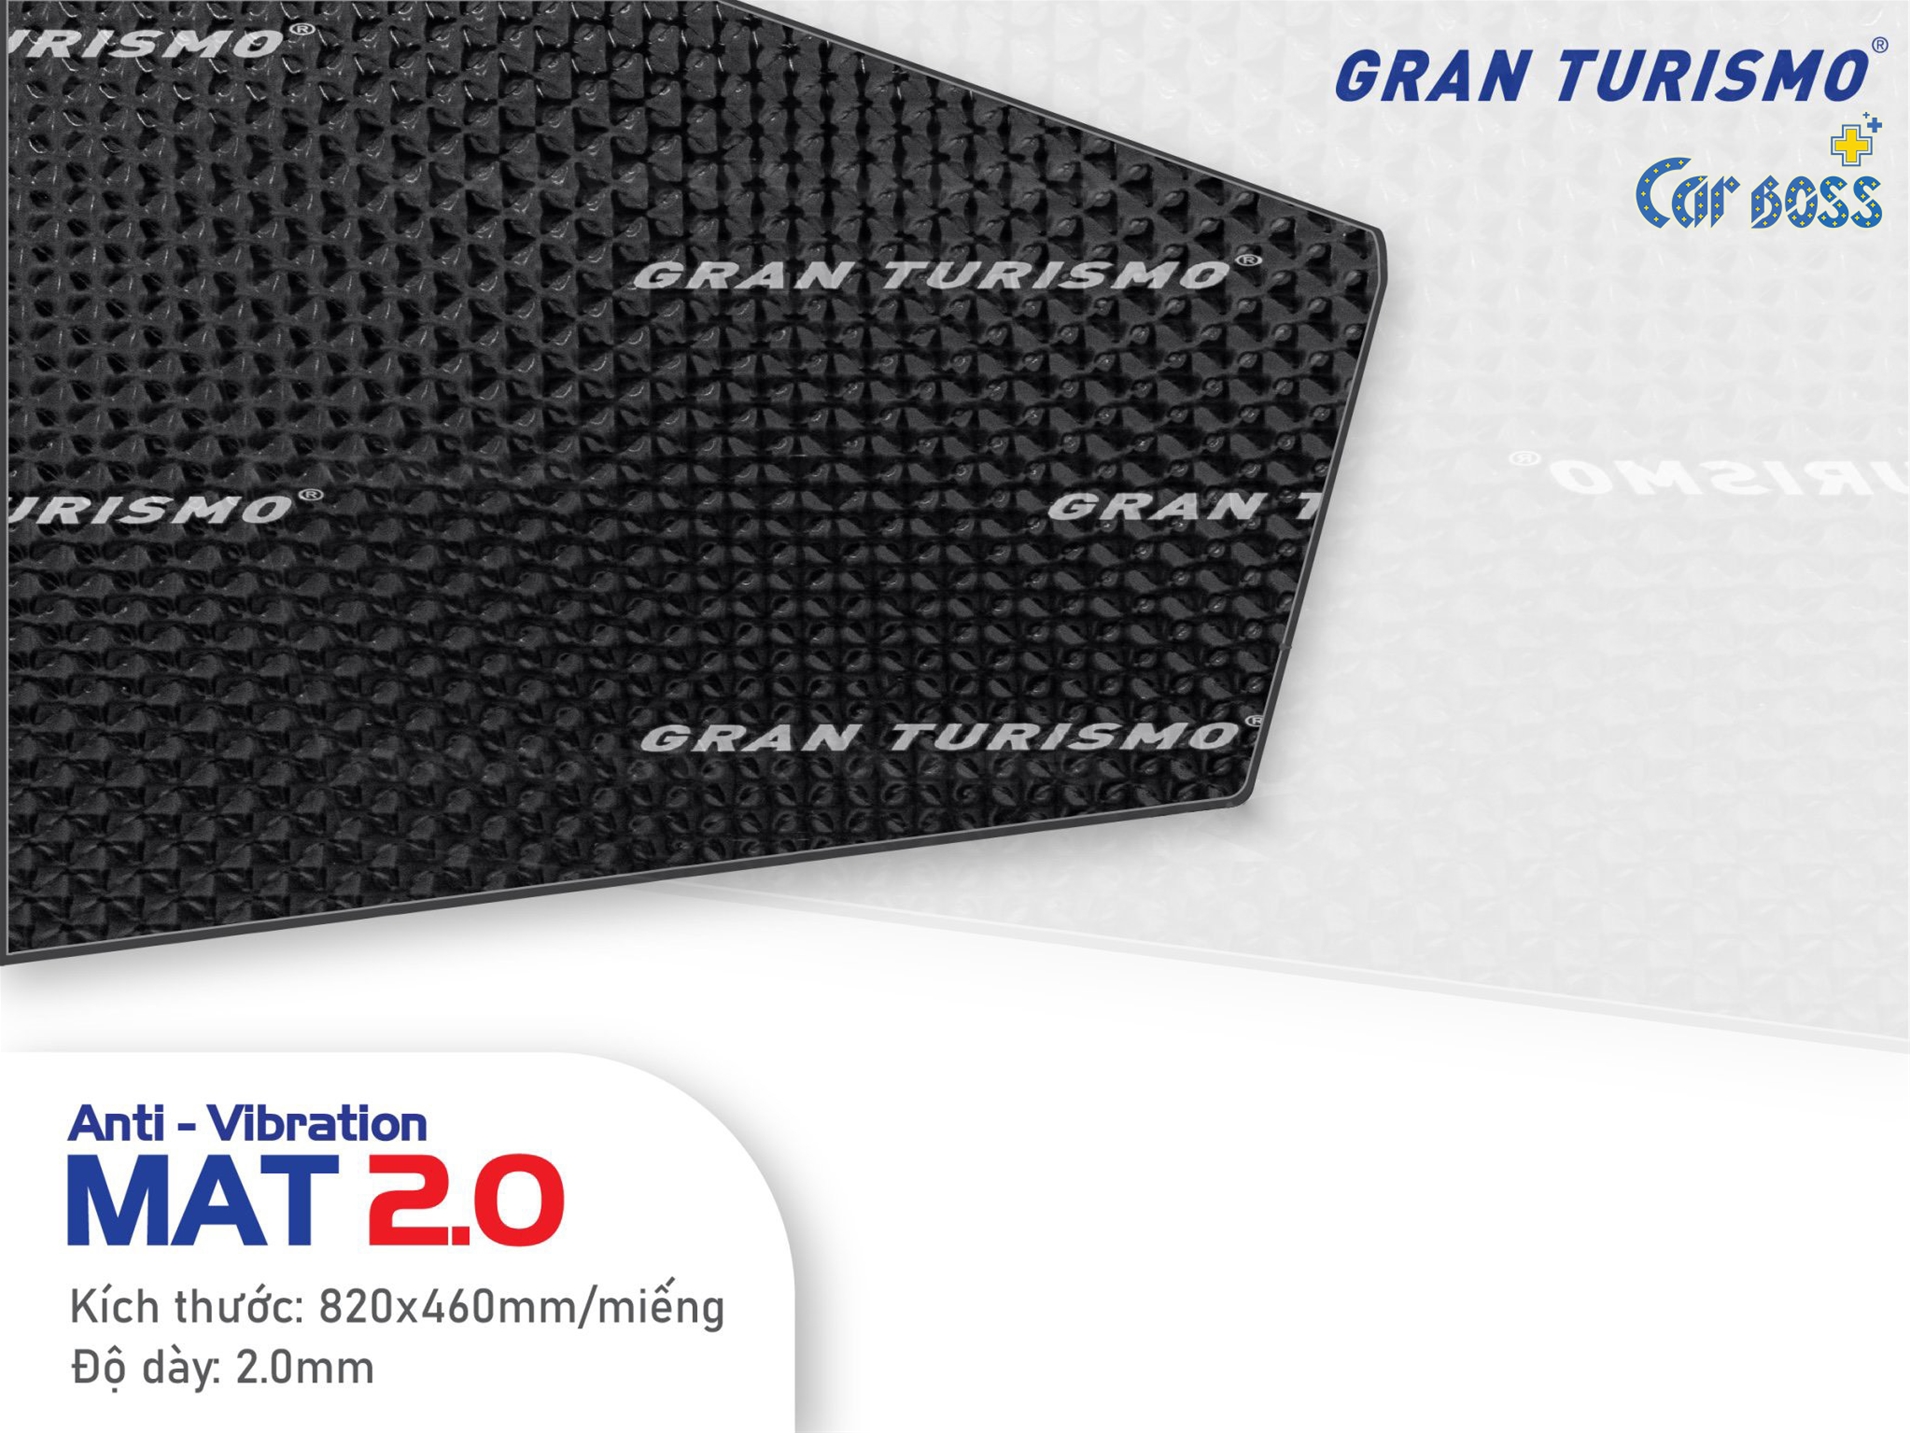 GRAN TURISMO MAT 2.0 Best Seller 1